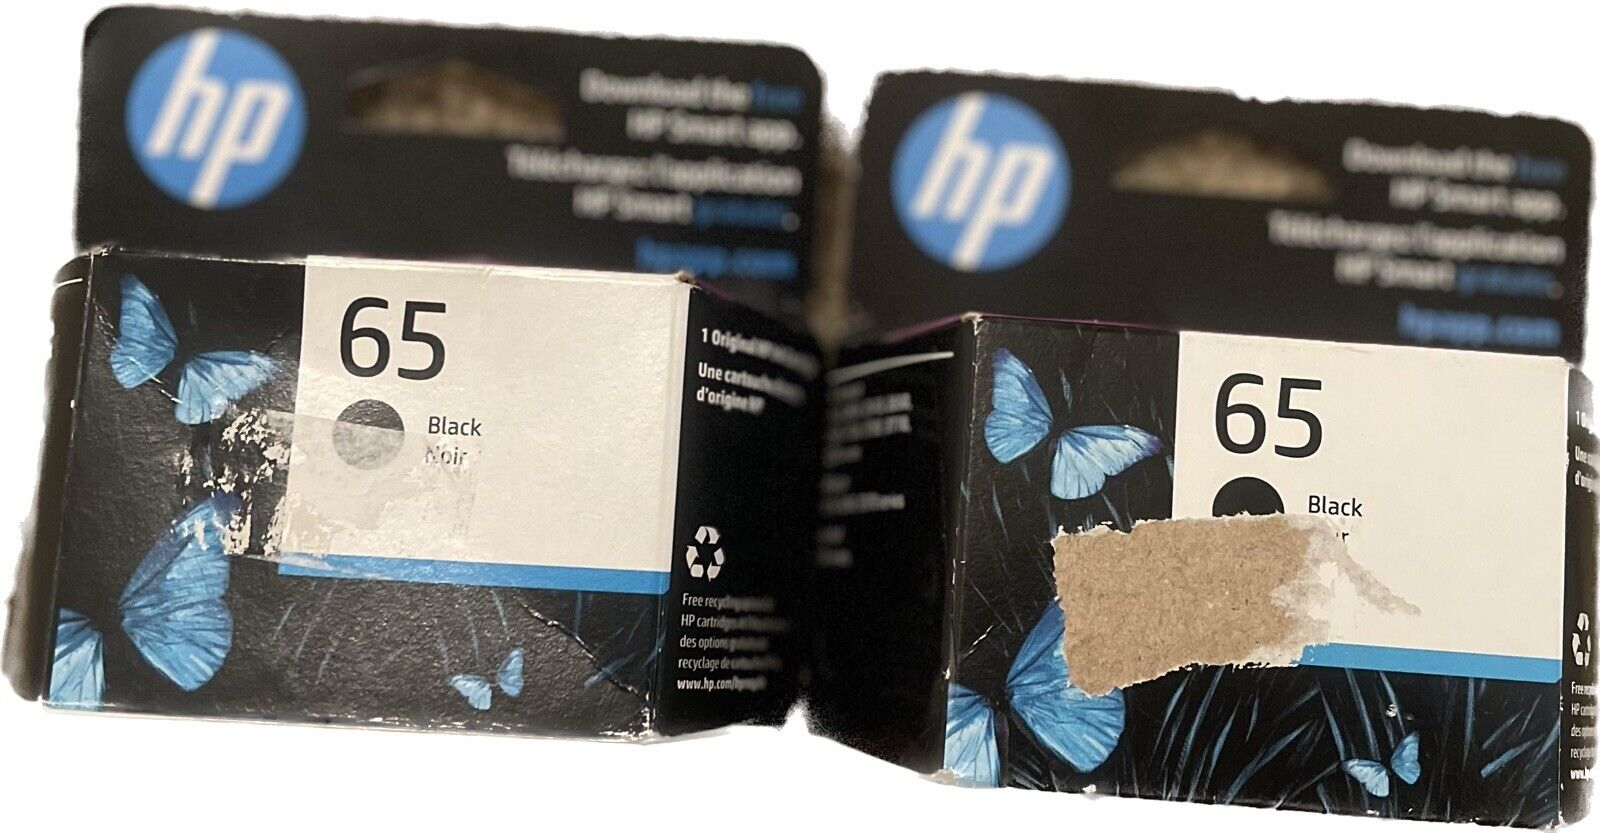 HP 65 Black Ink Cartridge GENUINE EXP 2025 BRAND NEW In Box LOT OF 2